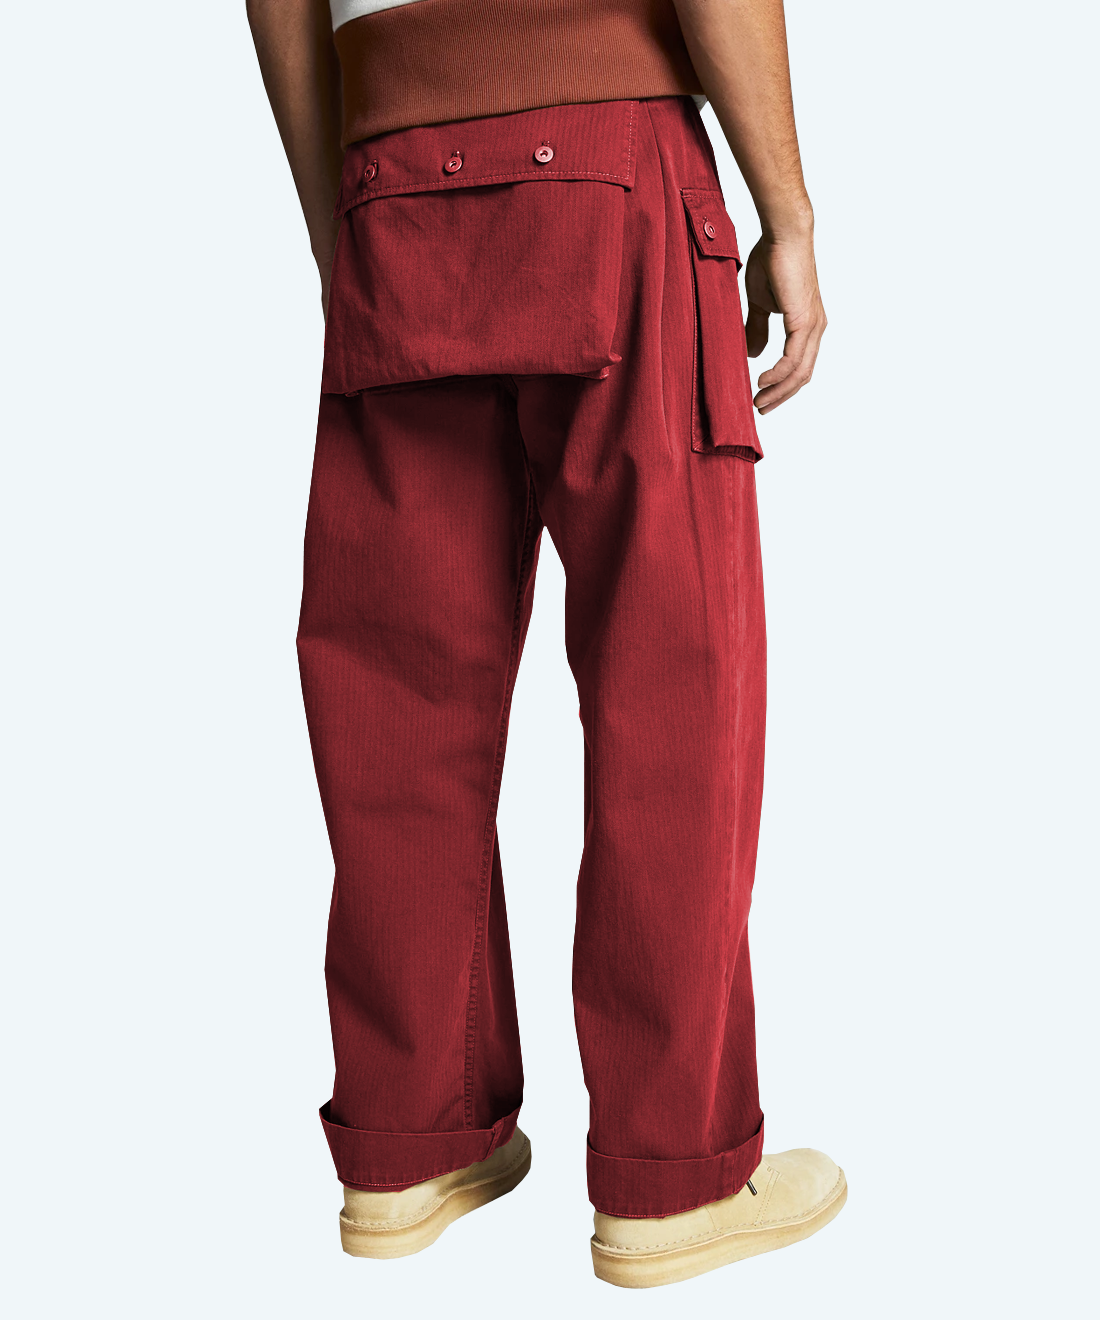 Worker pants rust фото 26